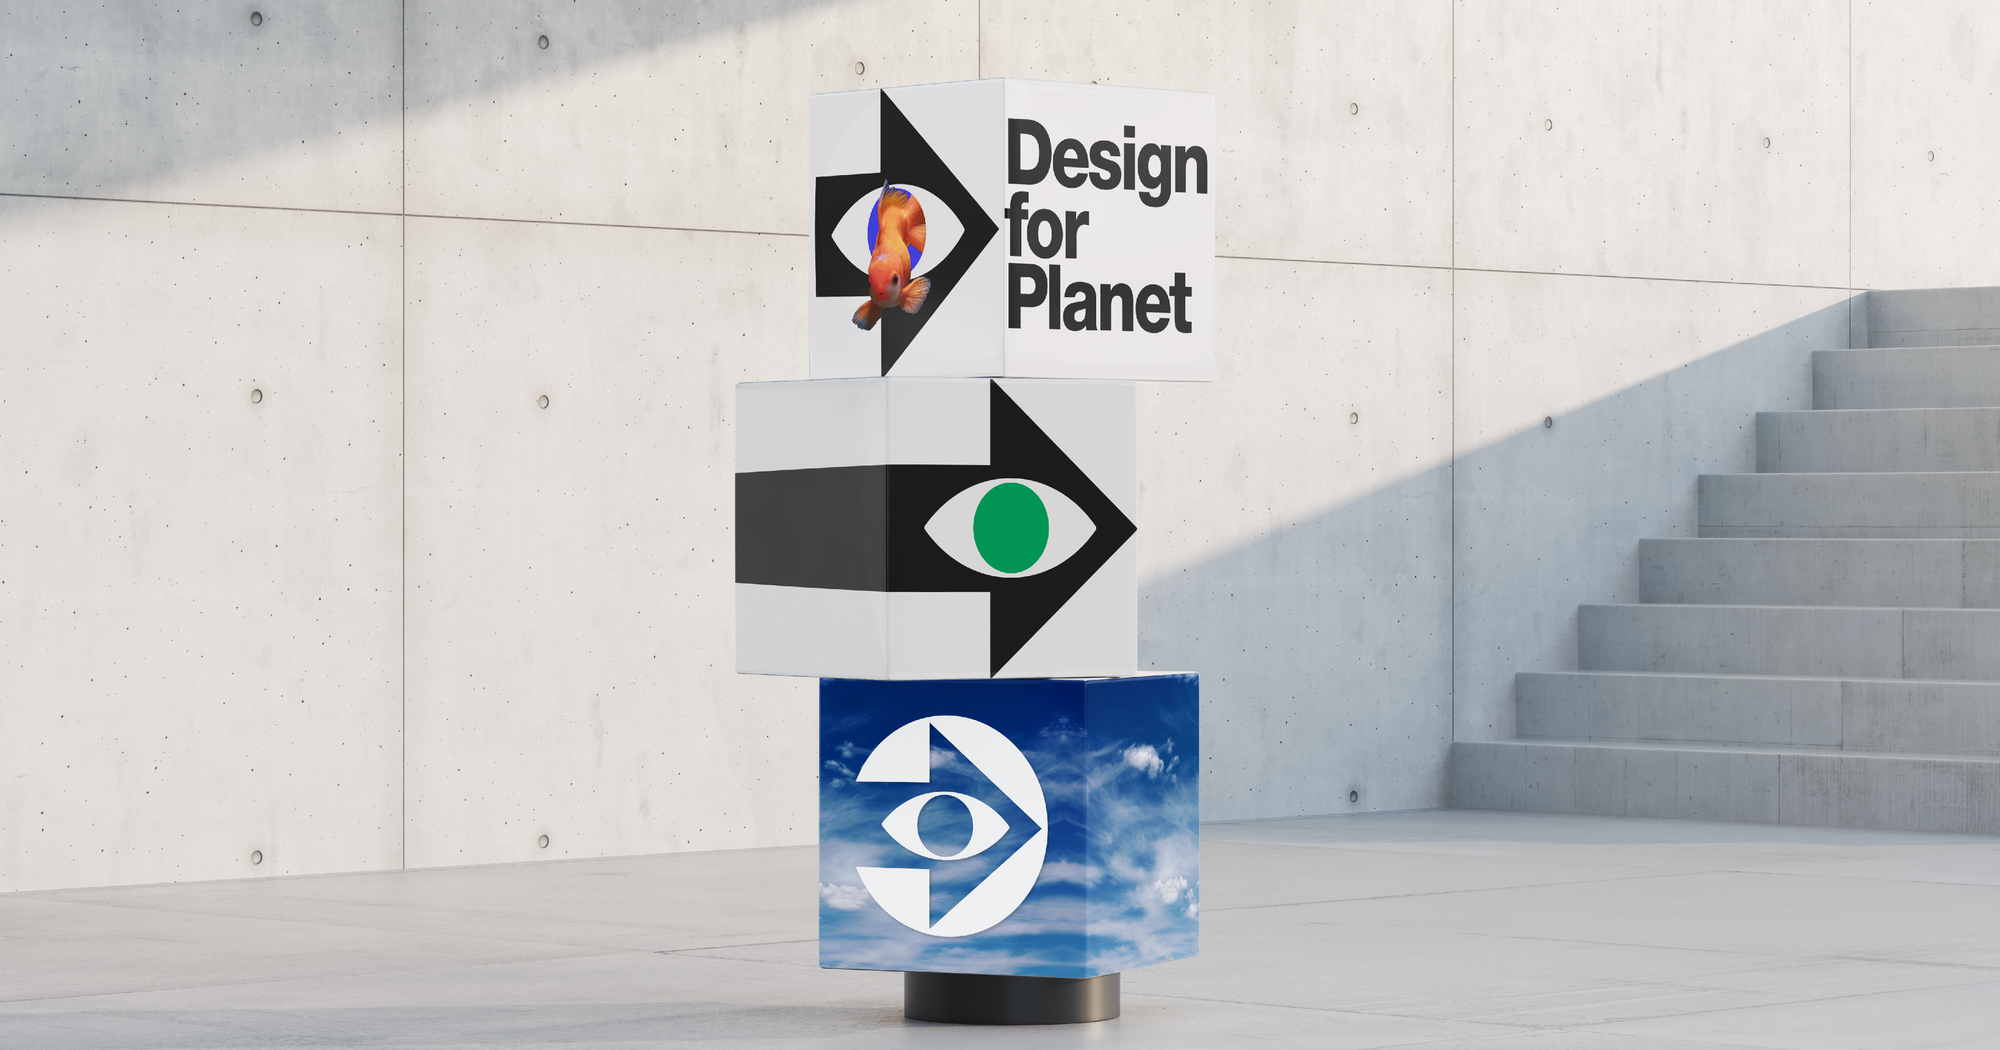 Design for Planet Festival, GOV Design Awards Gold Winner - Design Council